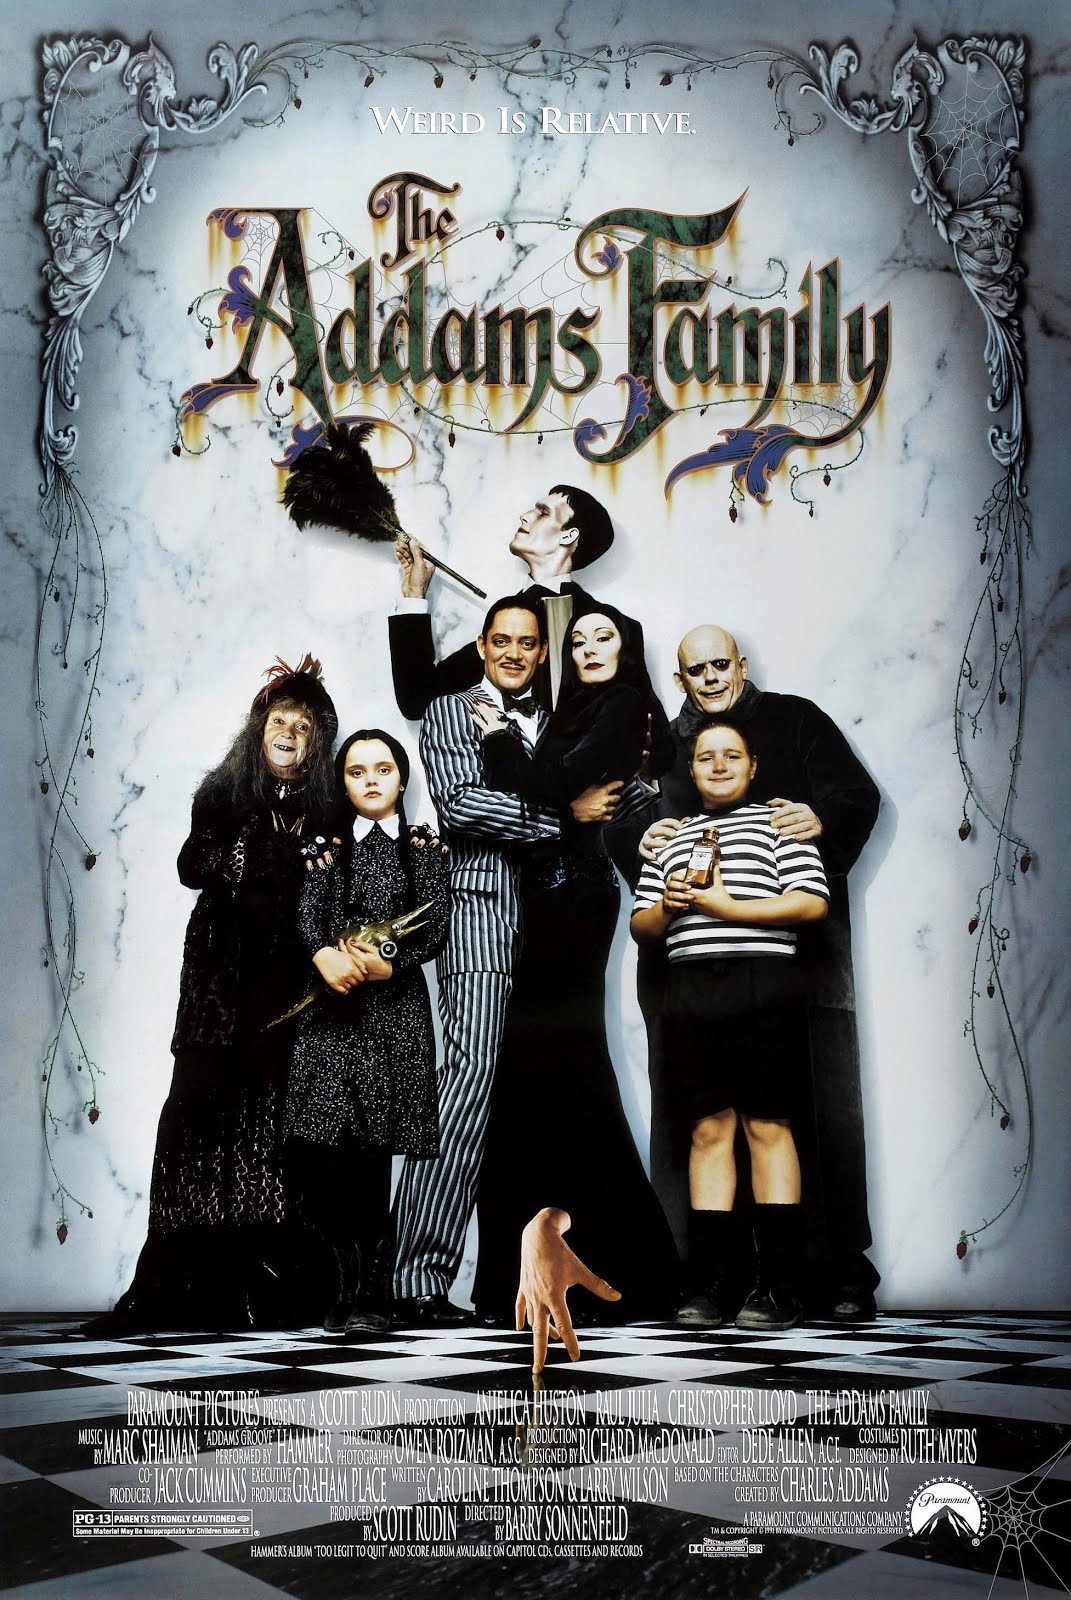 La famille Addams (1991) Barry Sonnenfeld - The Addams family (26.11.1990 / 16.04.1991)